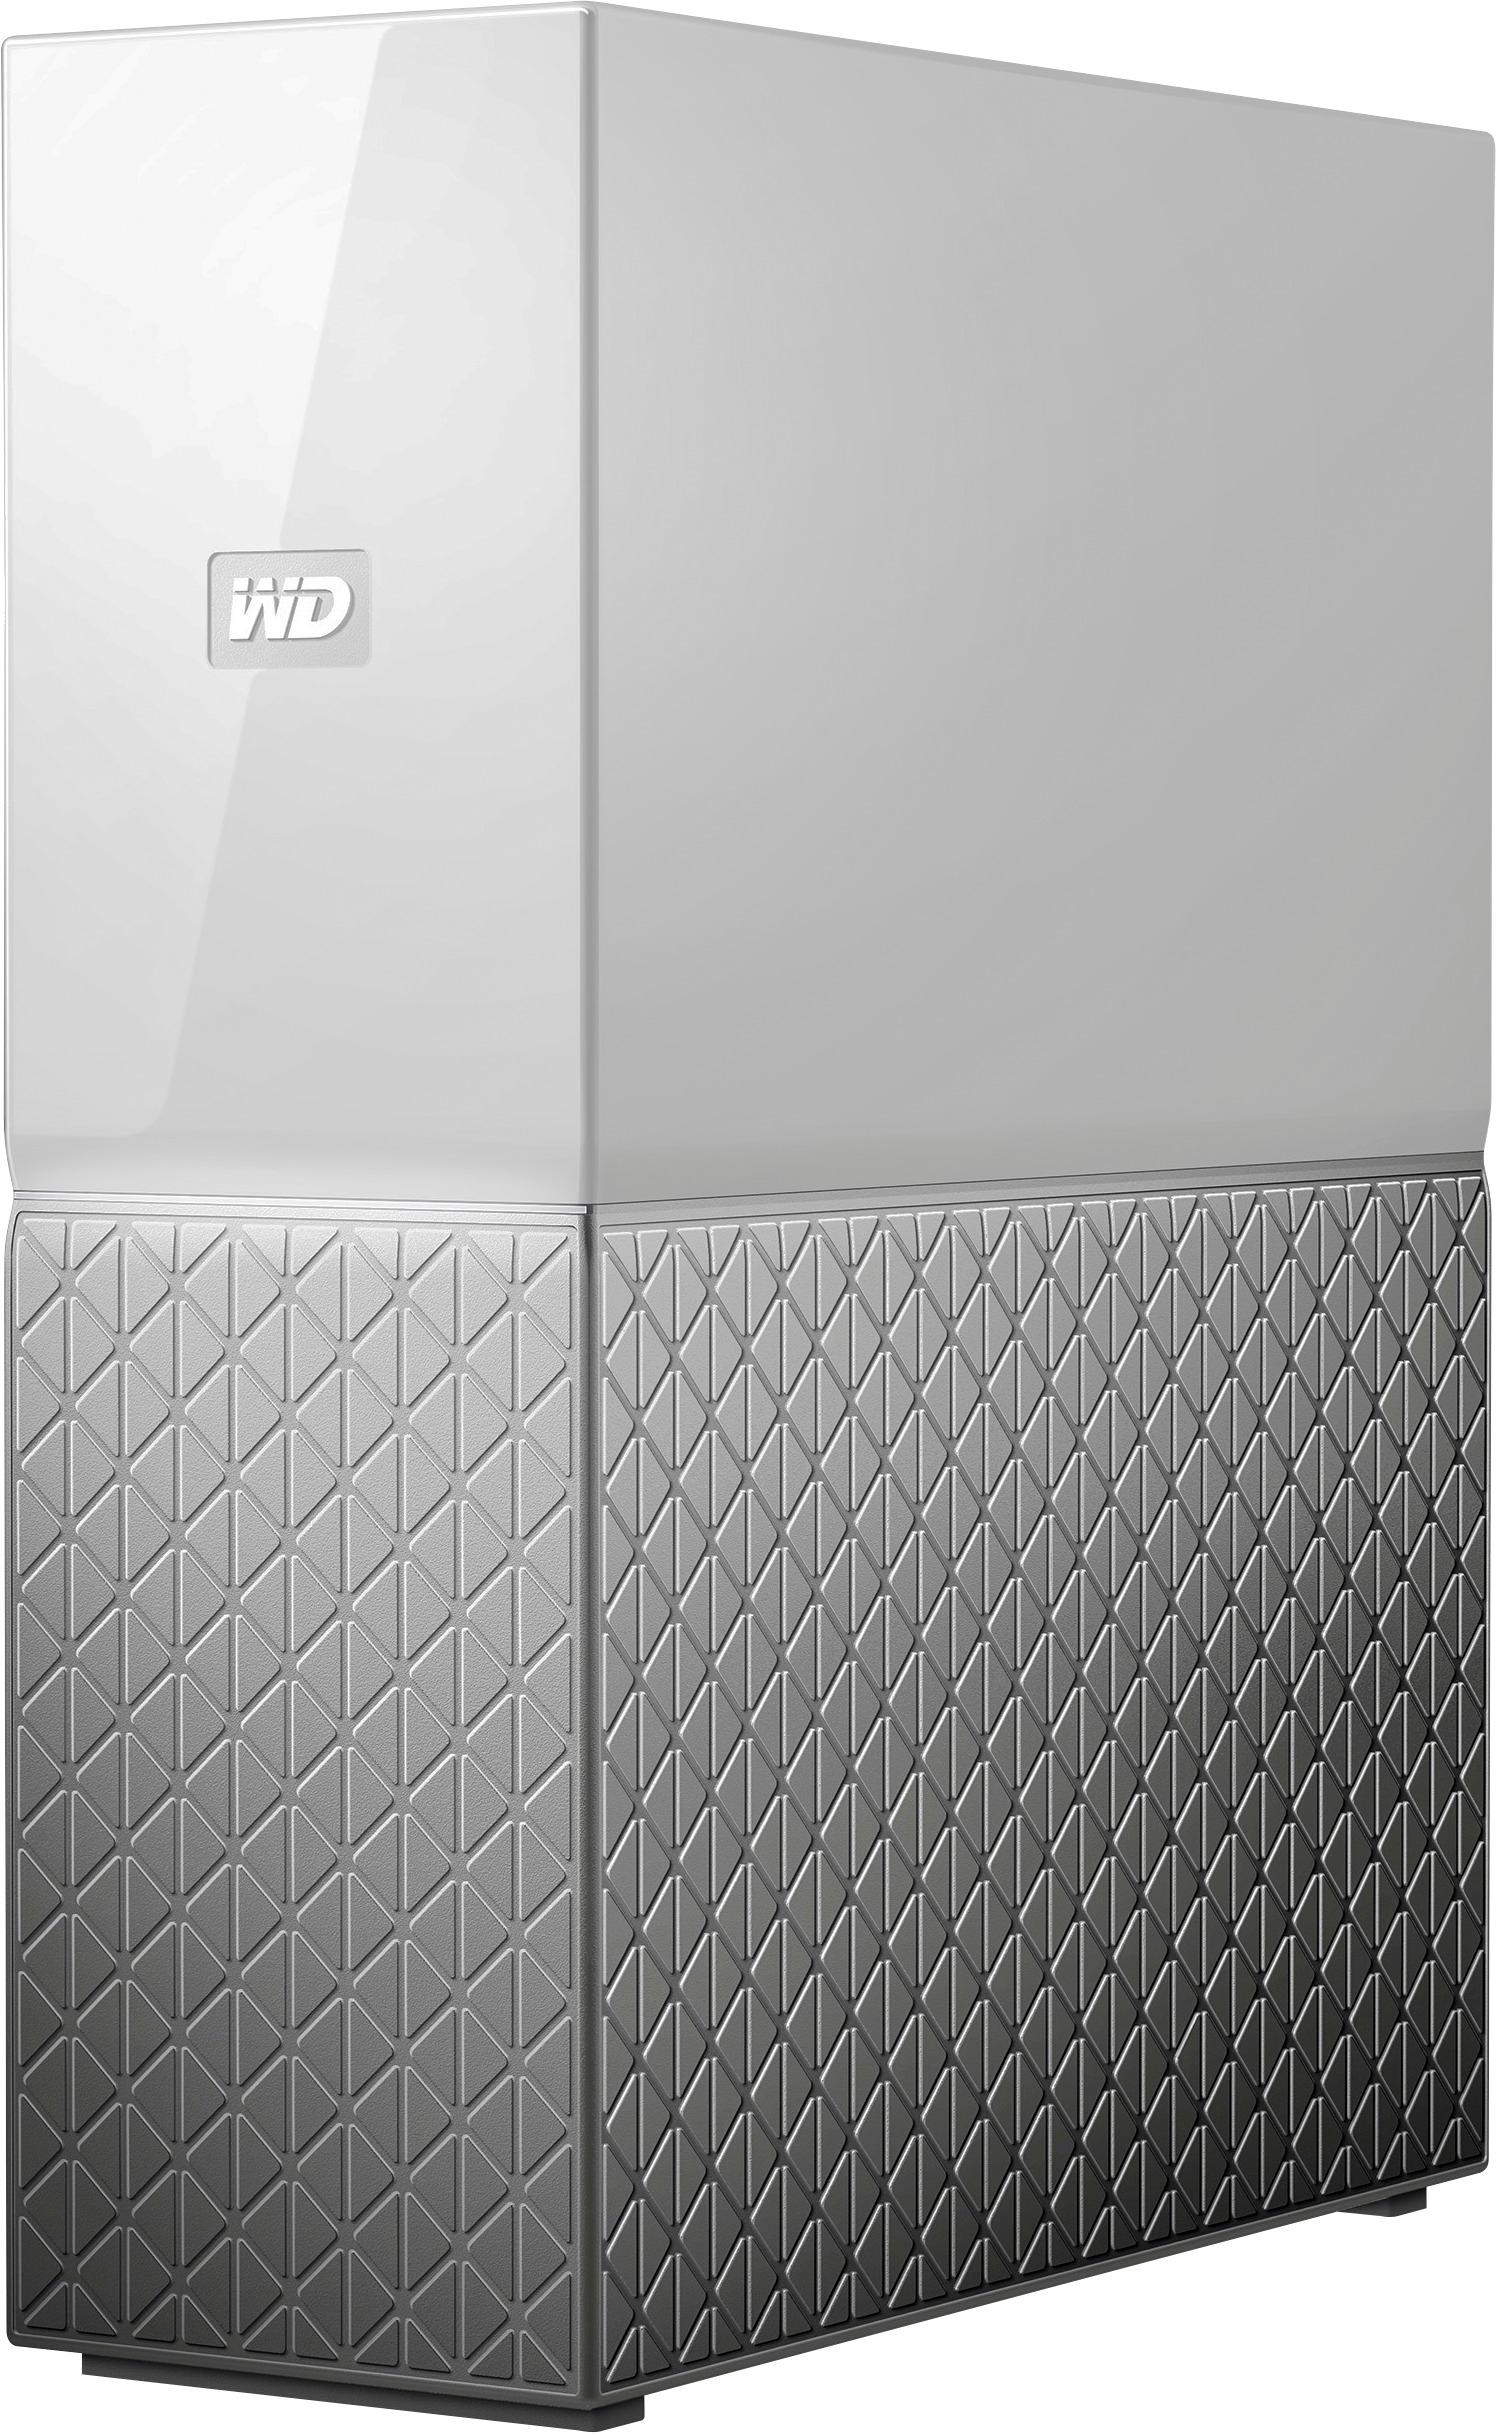 Left View: WD - Red Plus 4TB Internal SATA NAS Hard Drive for Desktops